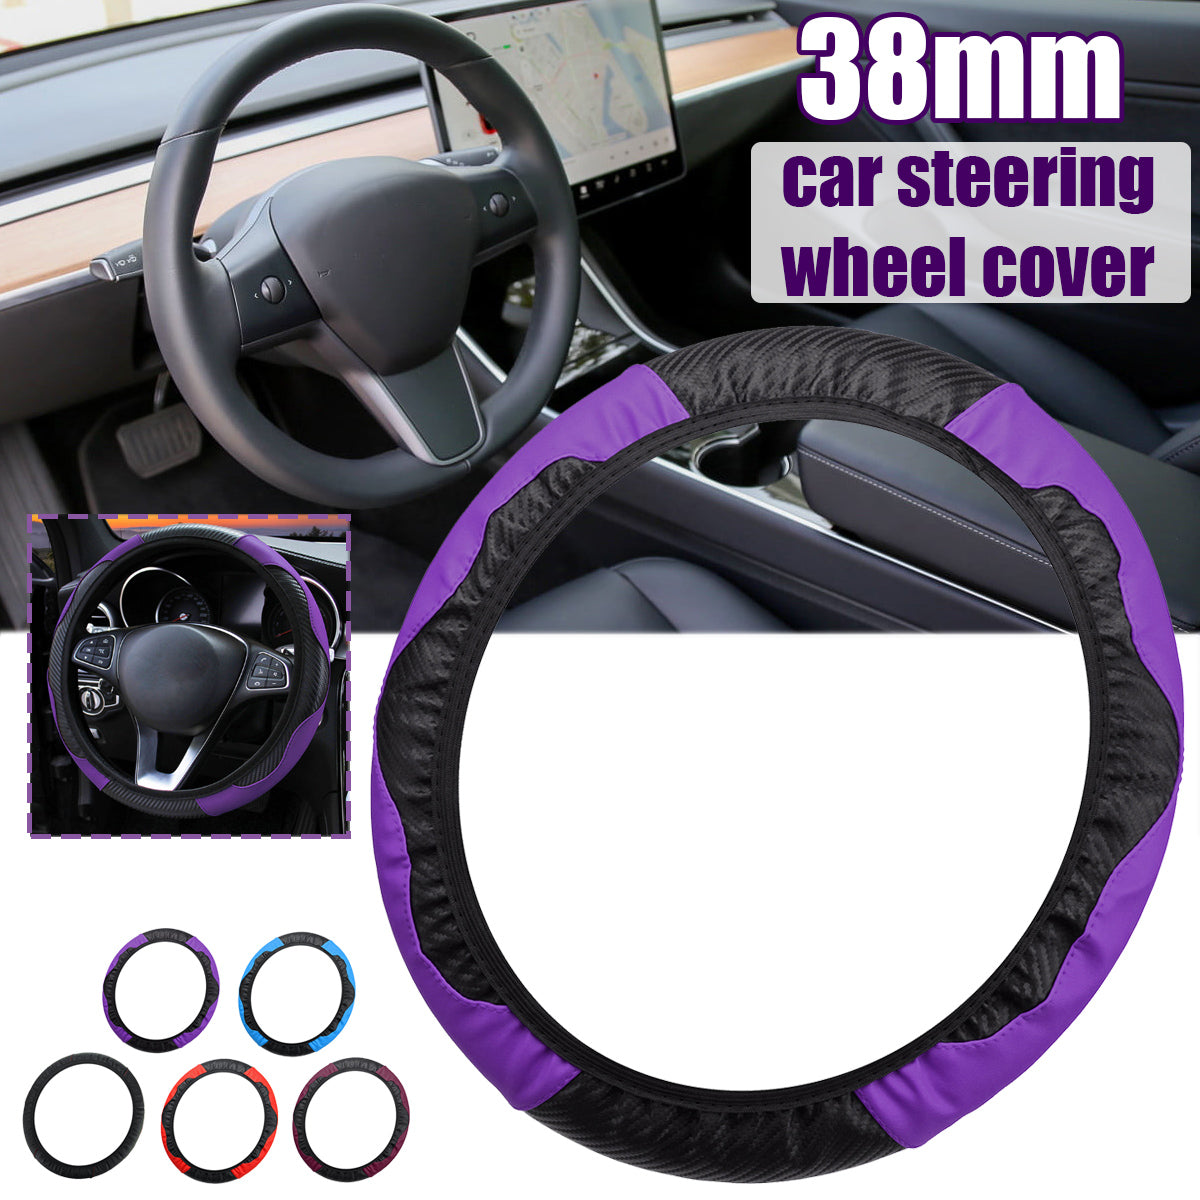 Car Carbon Fiber Steering Wheel Cover Anti-slip Protector